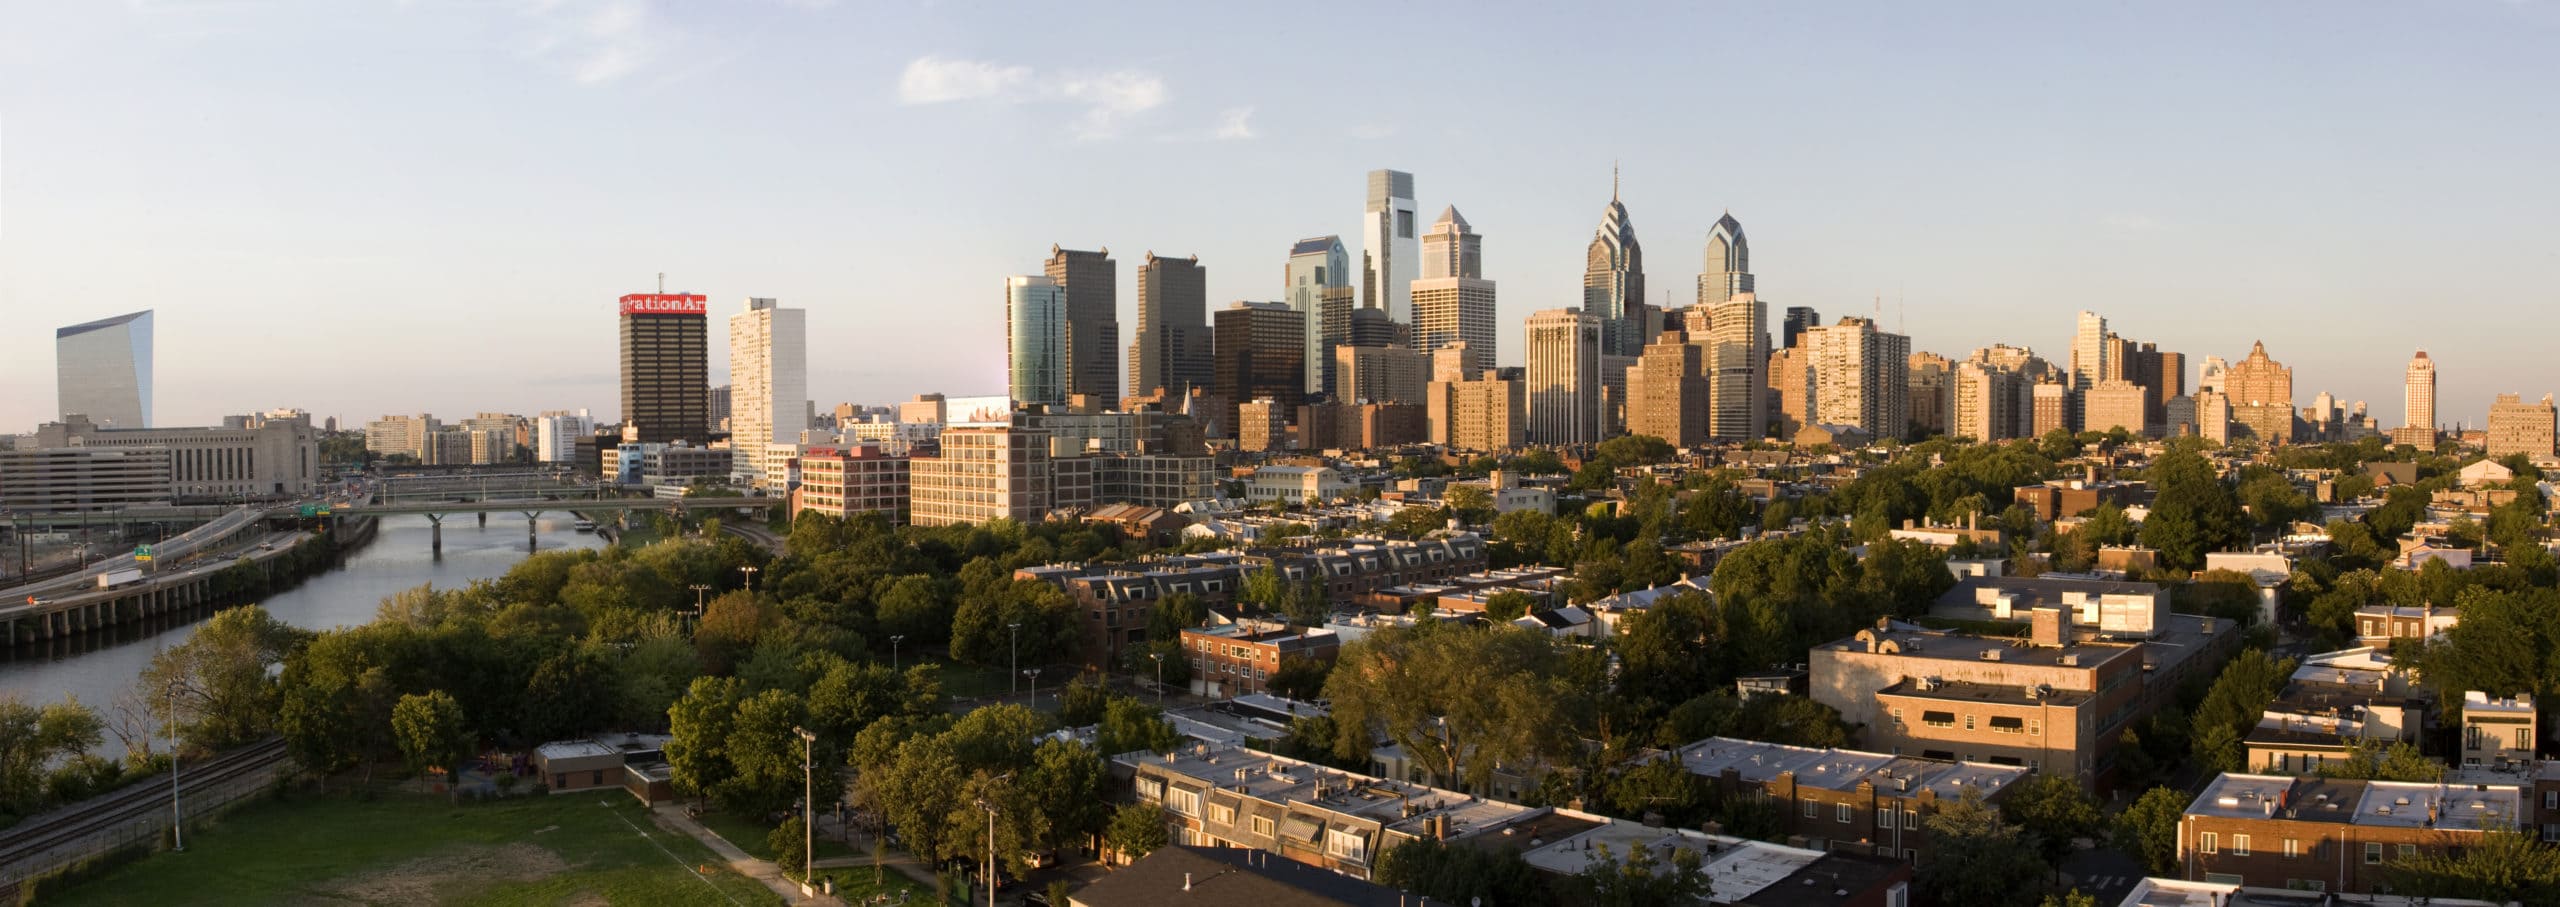 aerial view of South Philadelphia